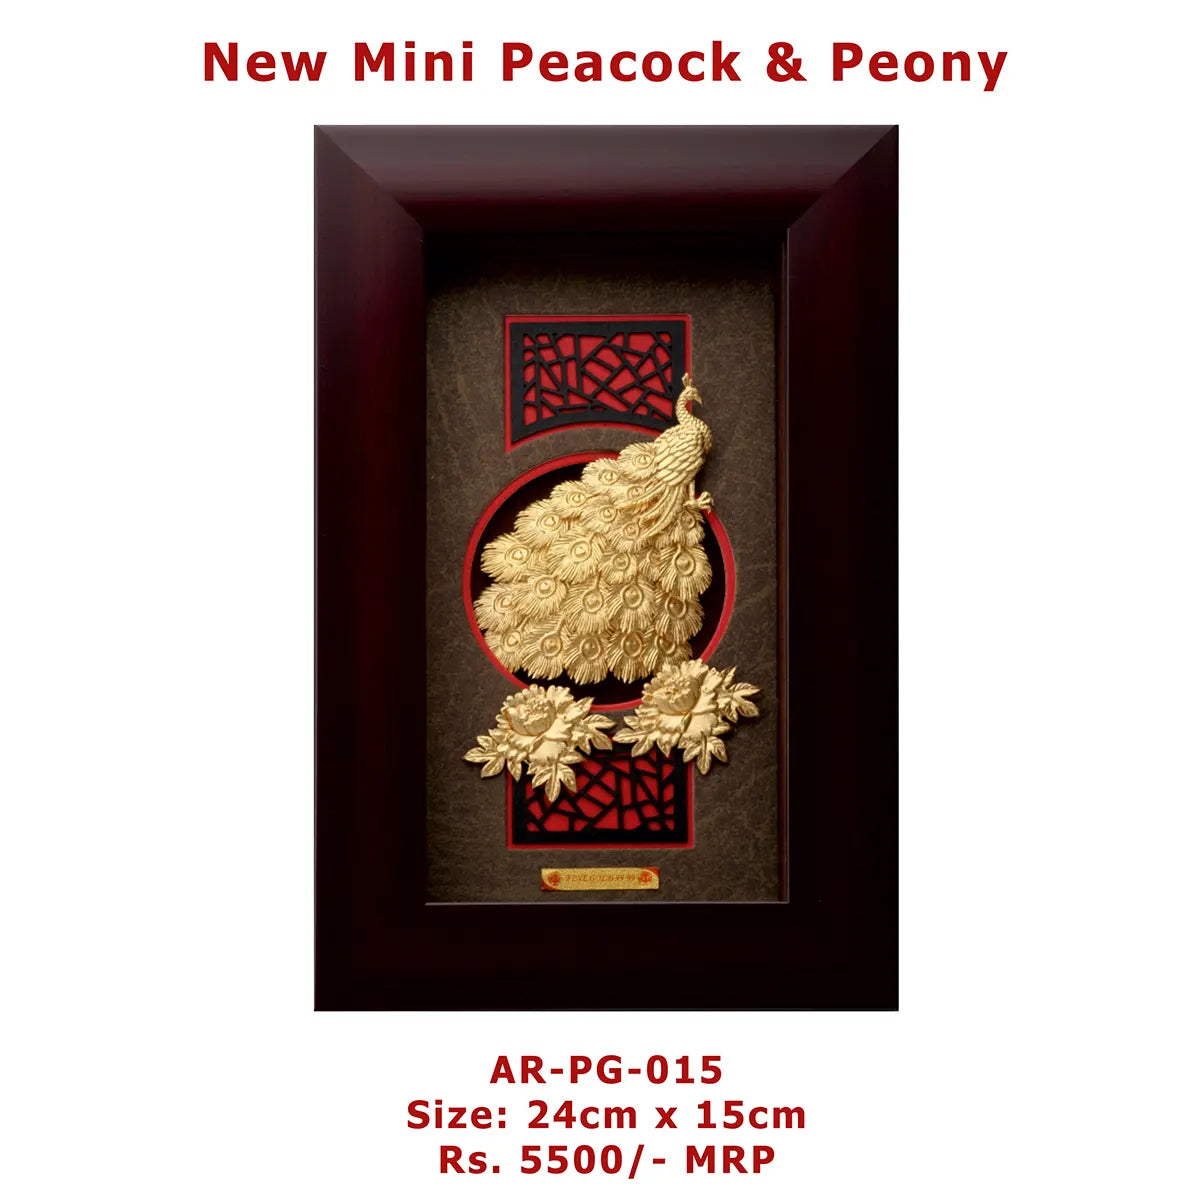 New Mini Peacock & Peony Frame L size